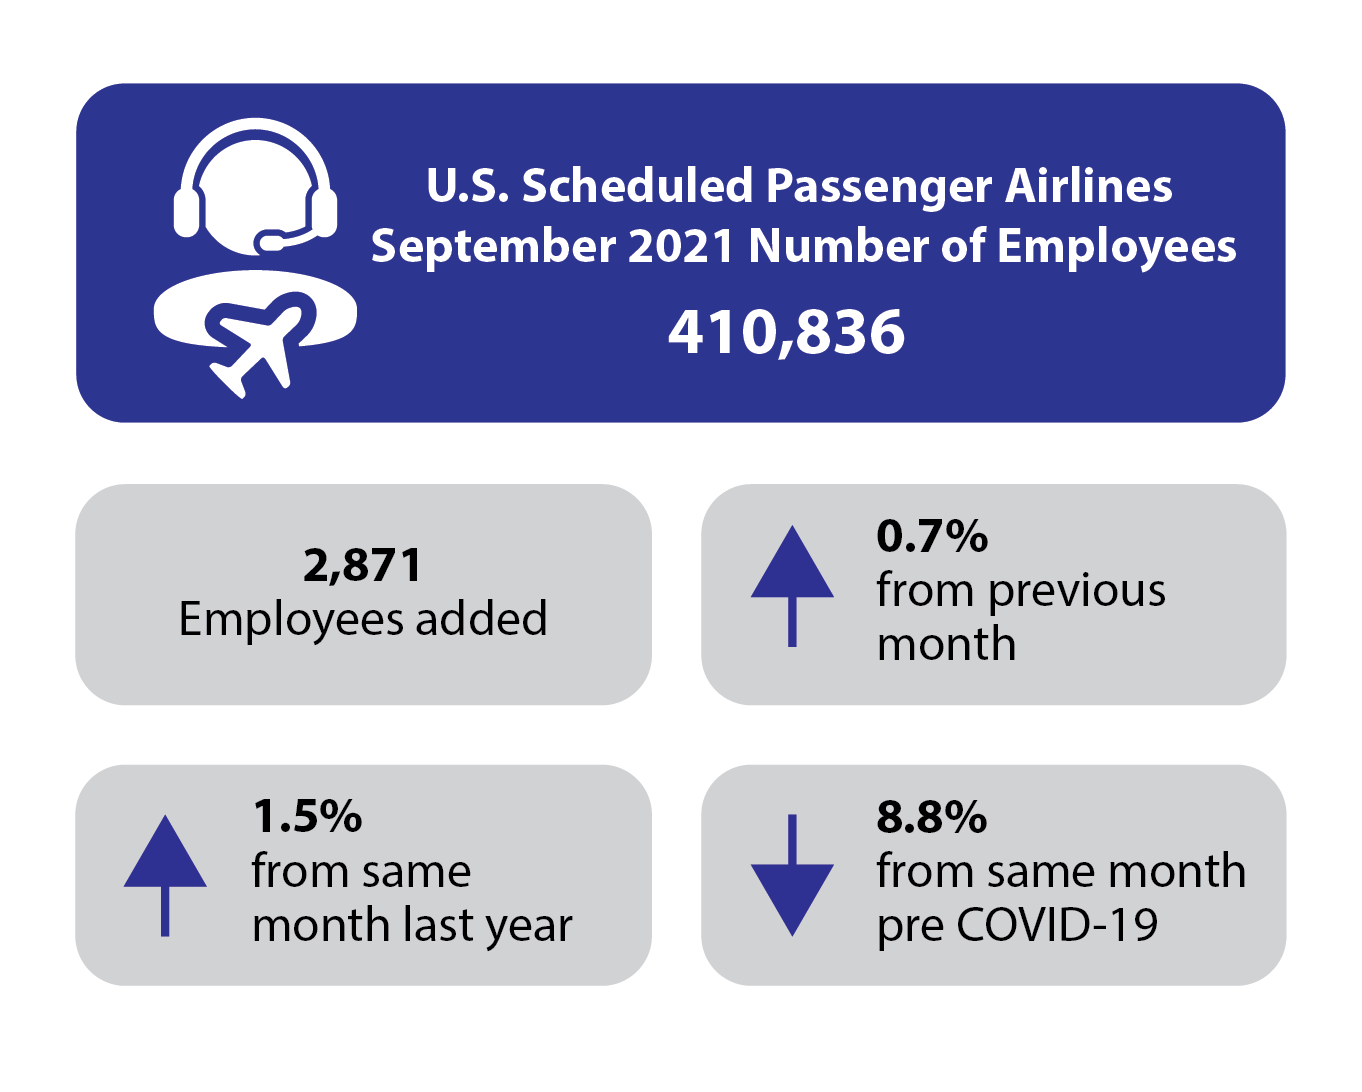 U.S. Scheduled Passenger Airlines Employment September 2021 Infographic